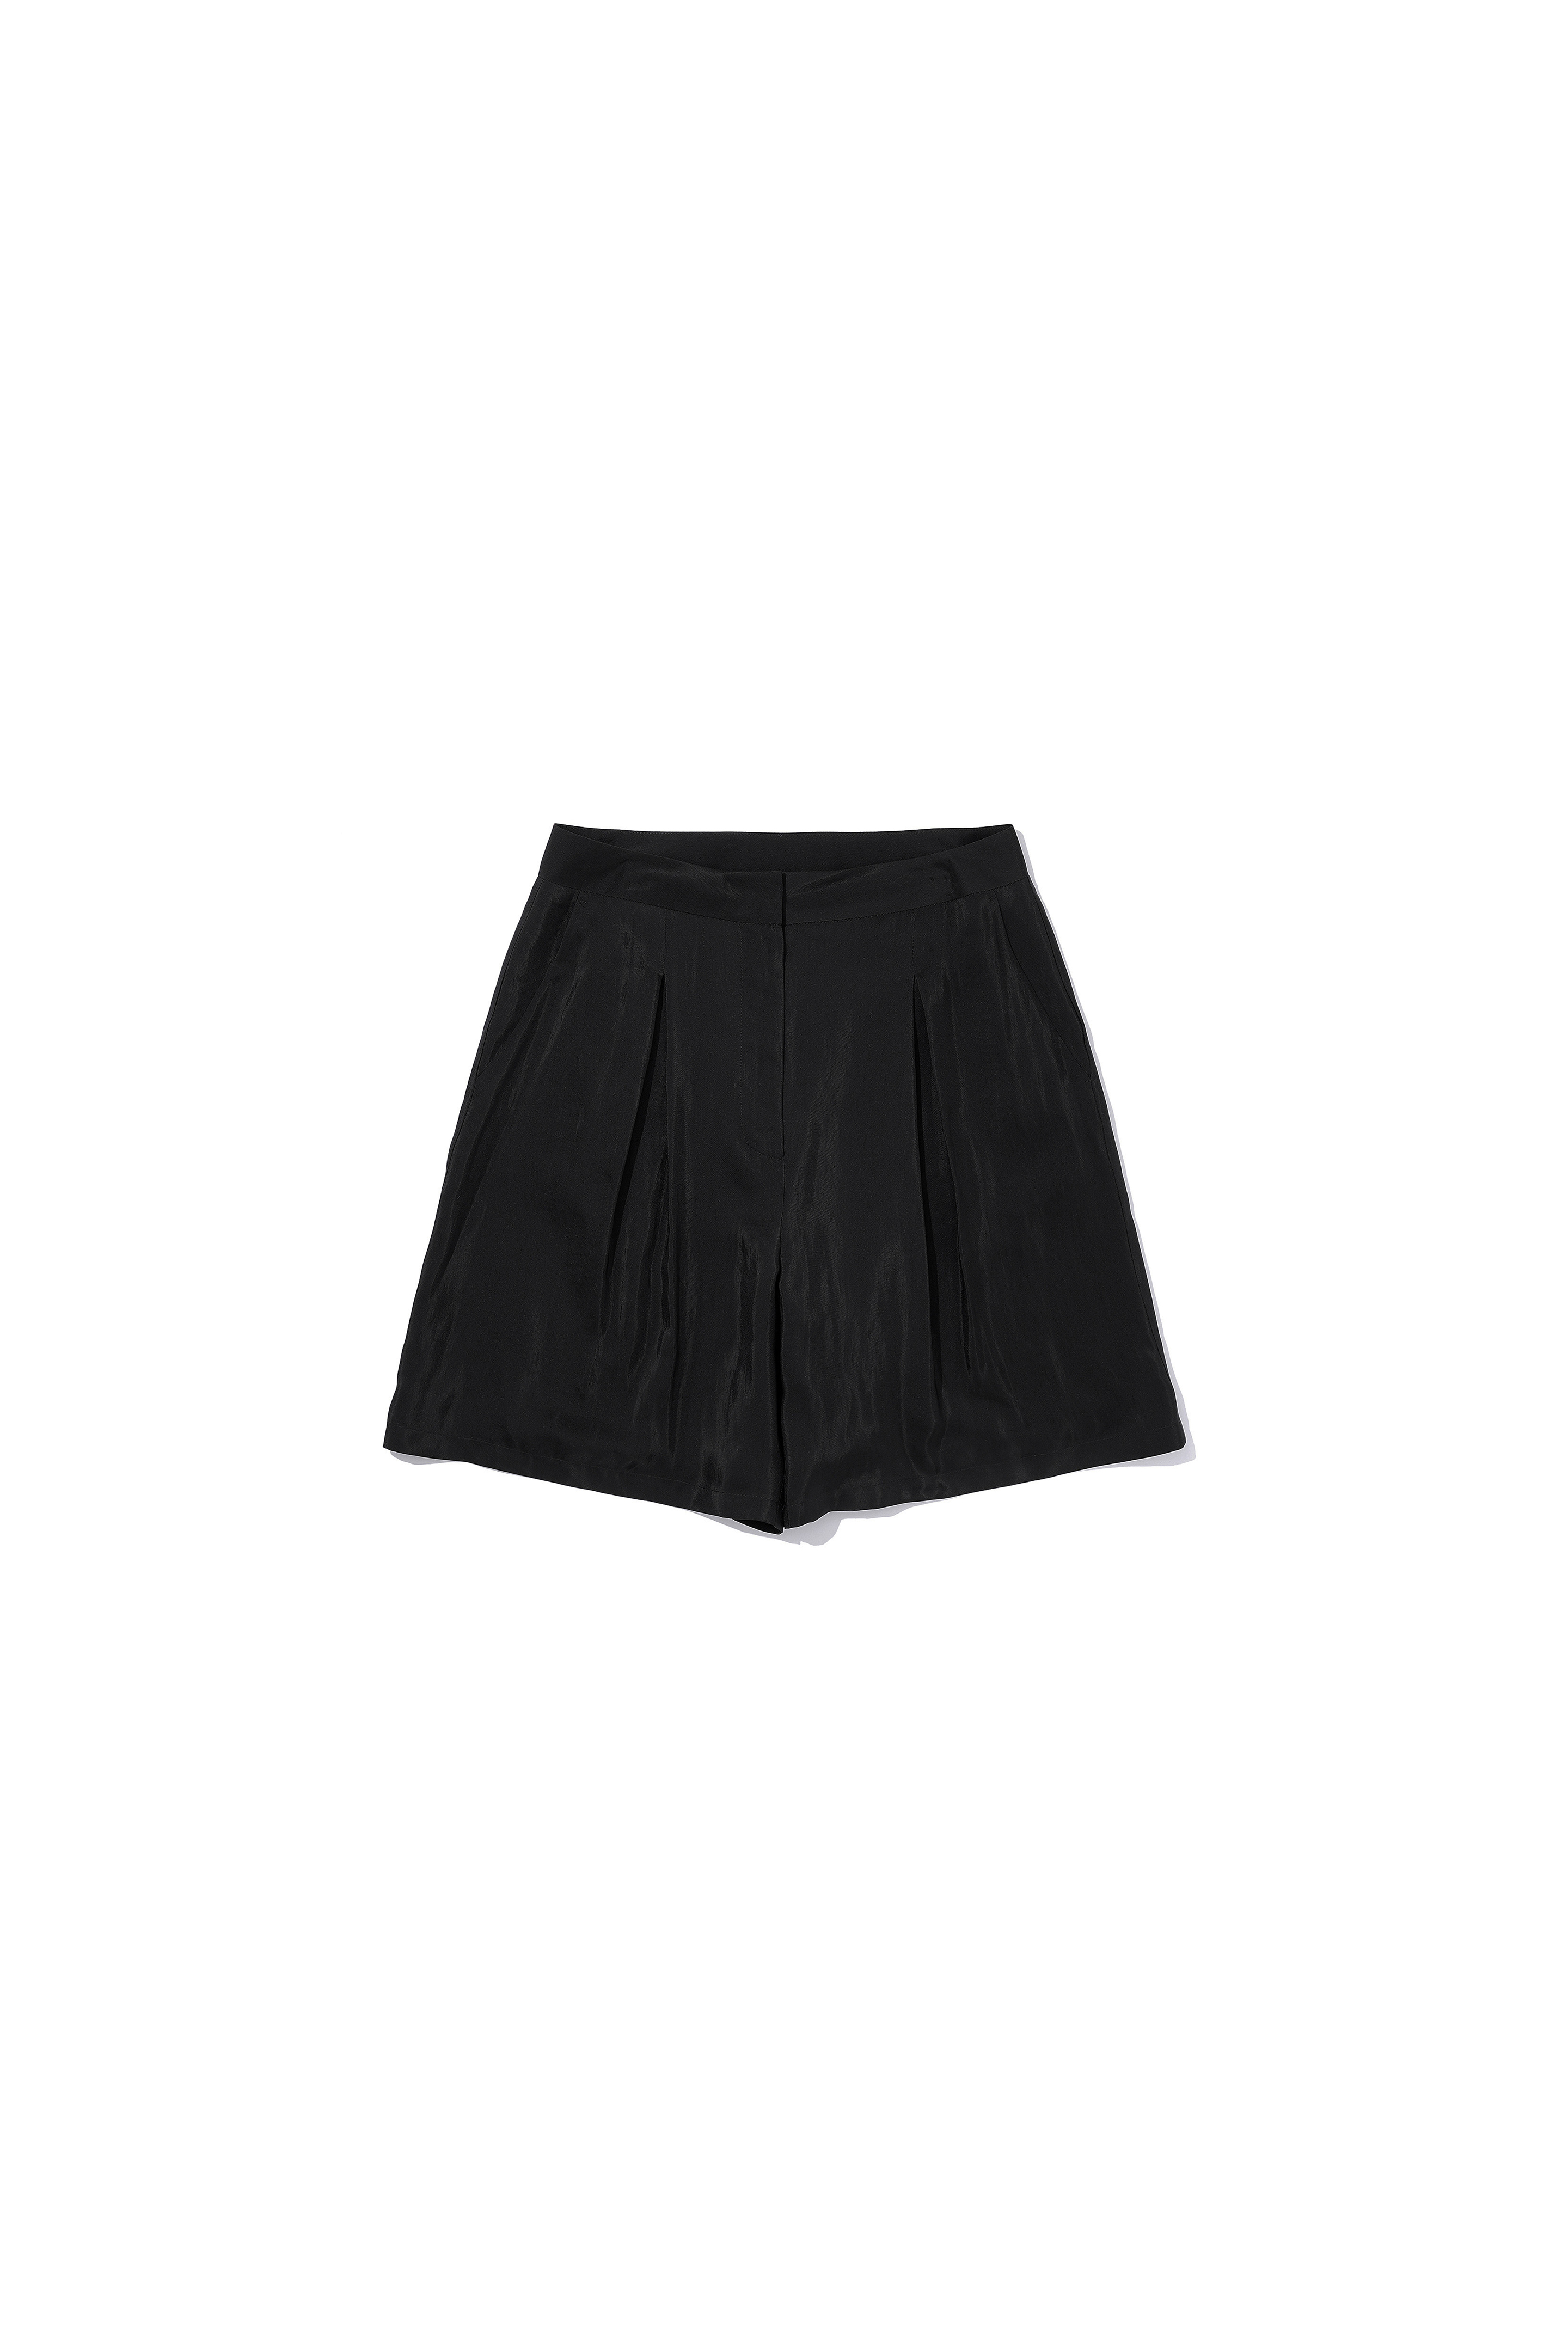 Silk-like Shorts Black [05.23(THU) 20:00 OPEN]